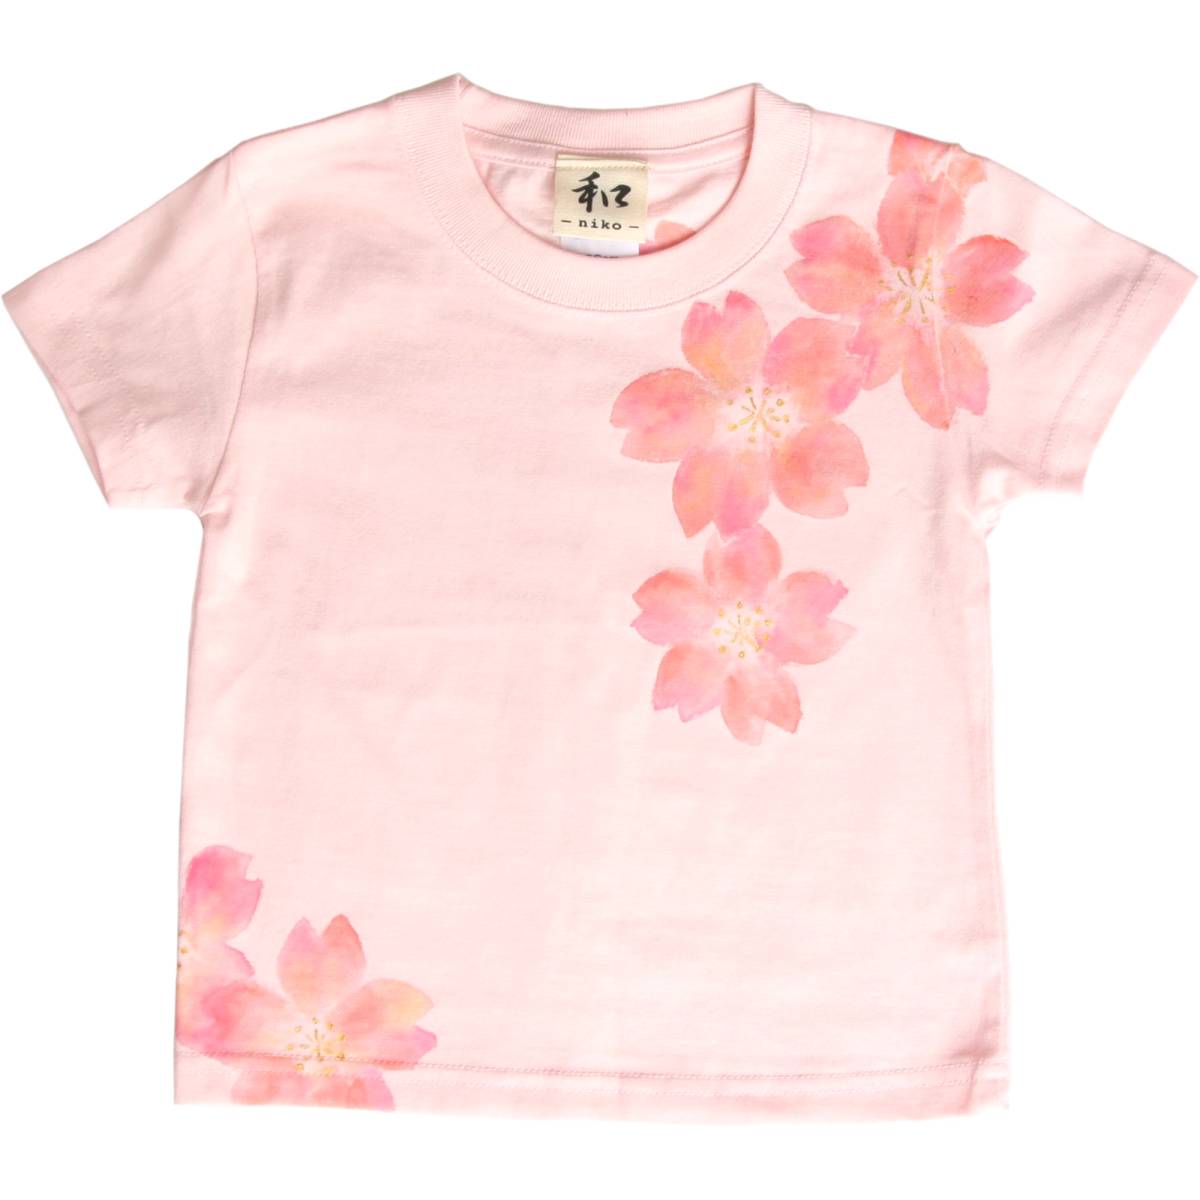 Ropa para niños Camiseta para niños Talla 110 Camiseta con estampado de flor de cerezo rosa Camiseta hecha a mano Camiseta pintada a mano Patrón japonés Primavera, tapas, camiseta de manga corta, 110(105~114cm)